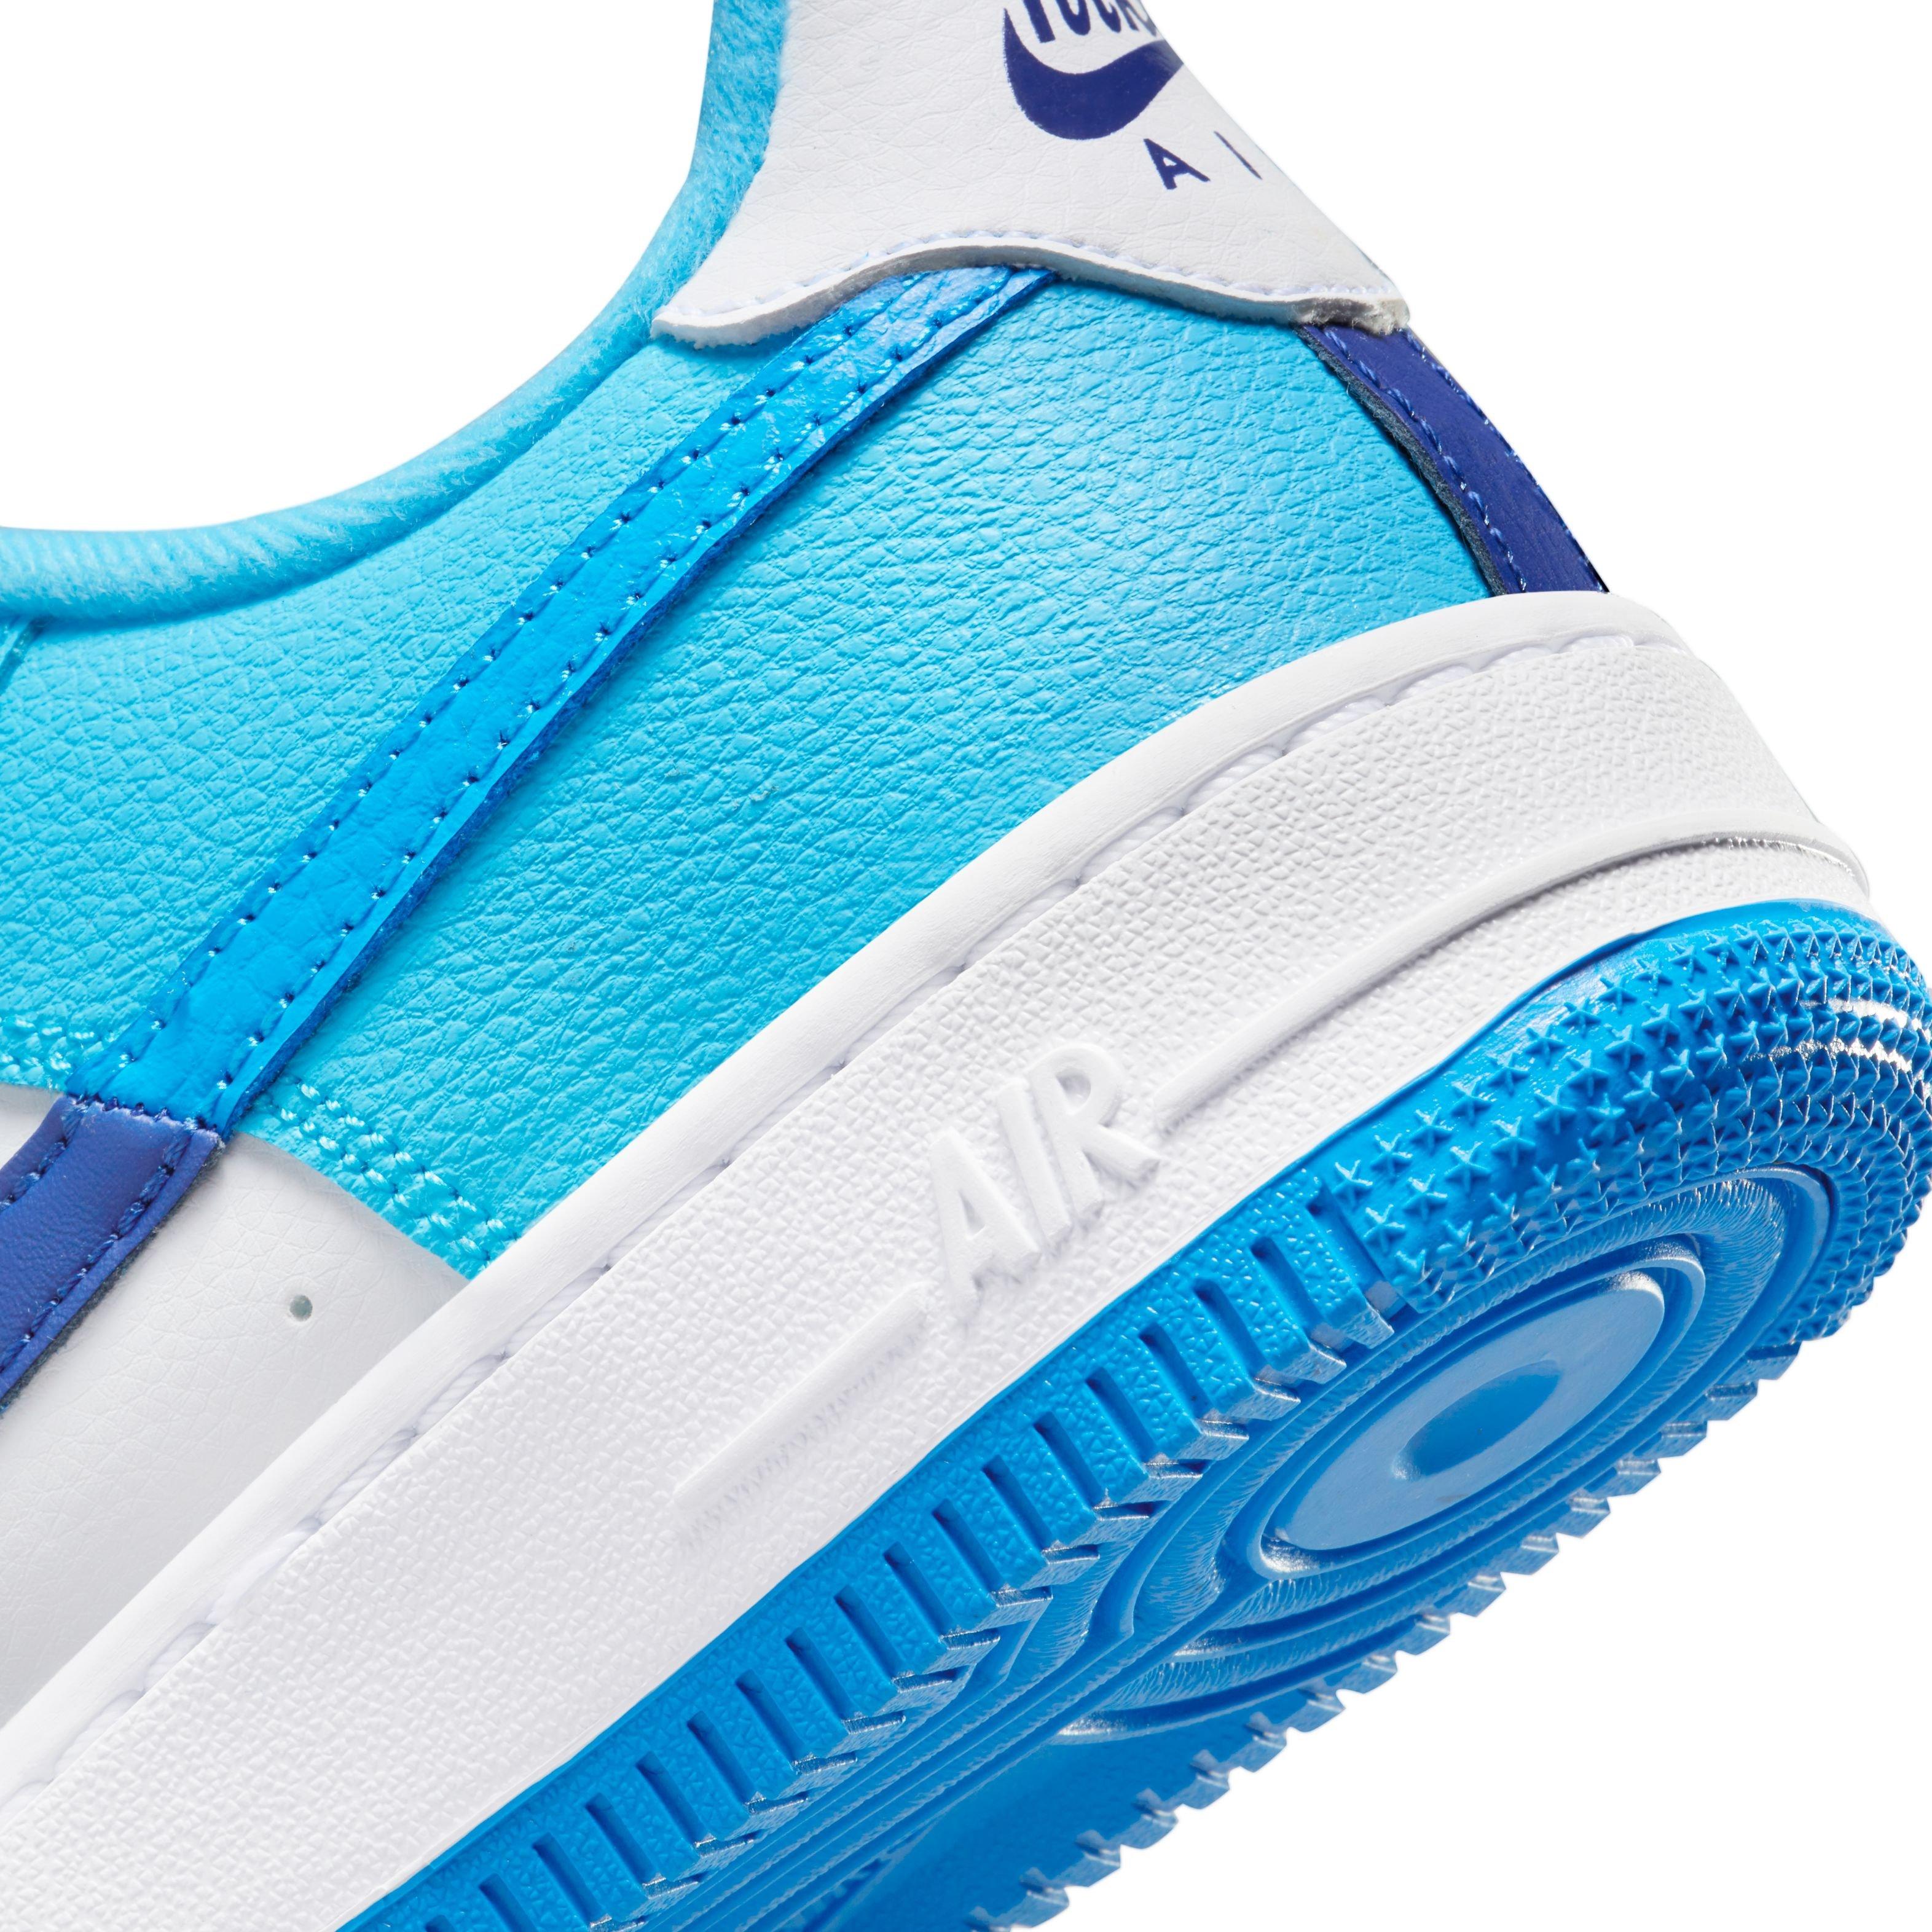 Nike Toddler Air Force 1 Lv8 Ksa - White / Blue Hero / Bright